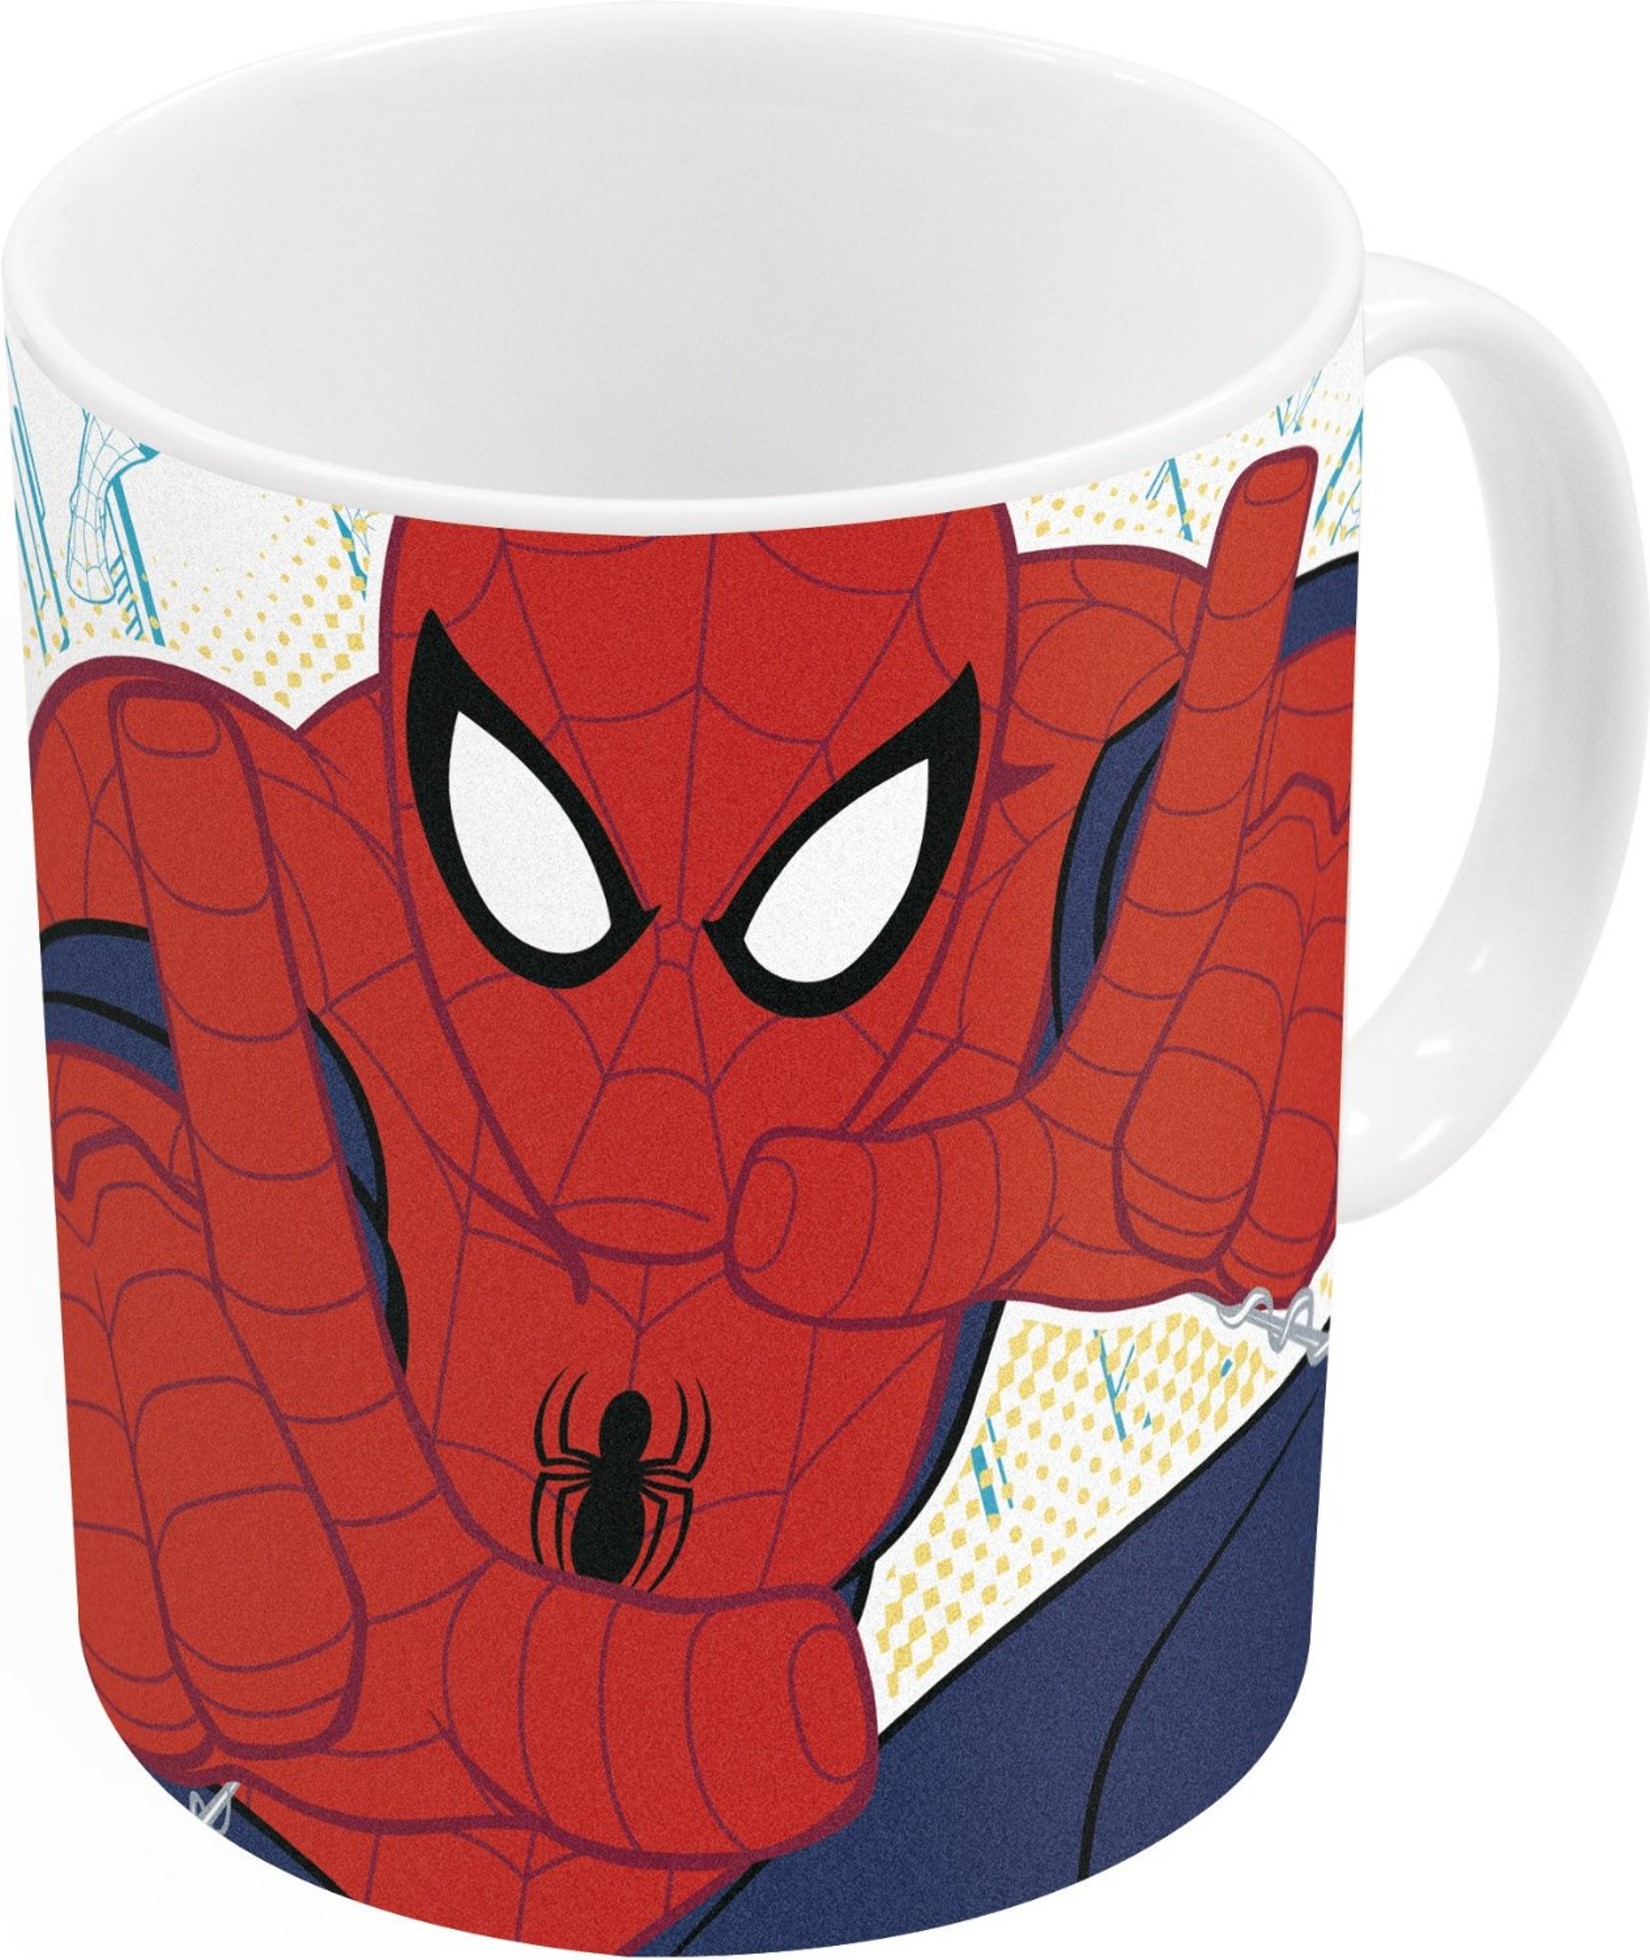 Spiderman Mug 78307 a.jpg  by Thingimijigs